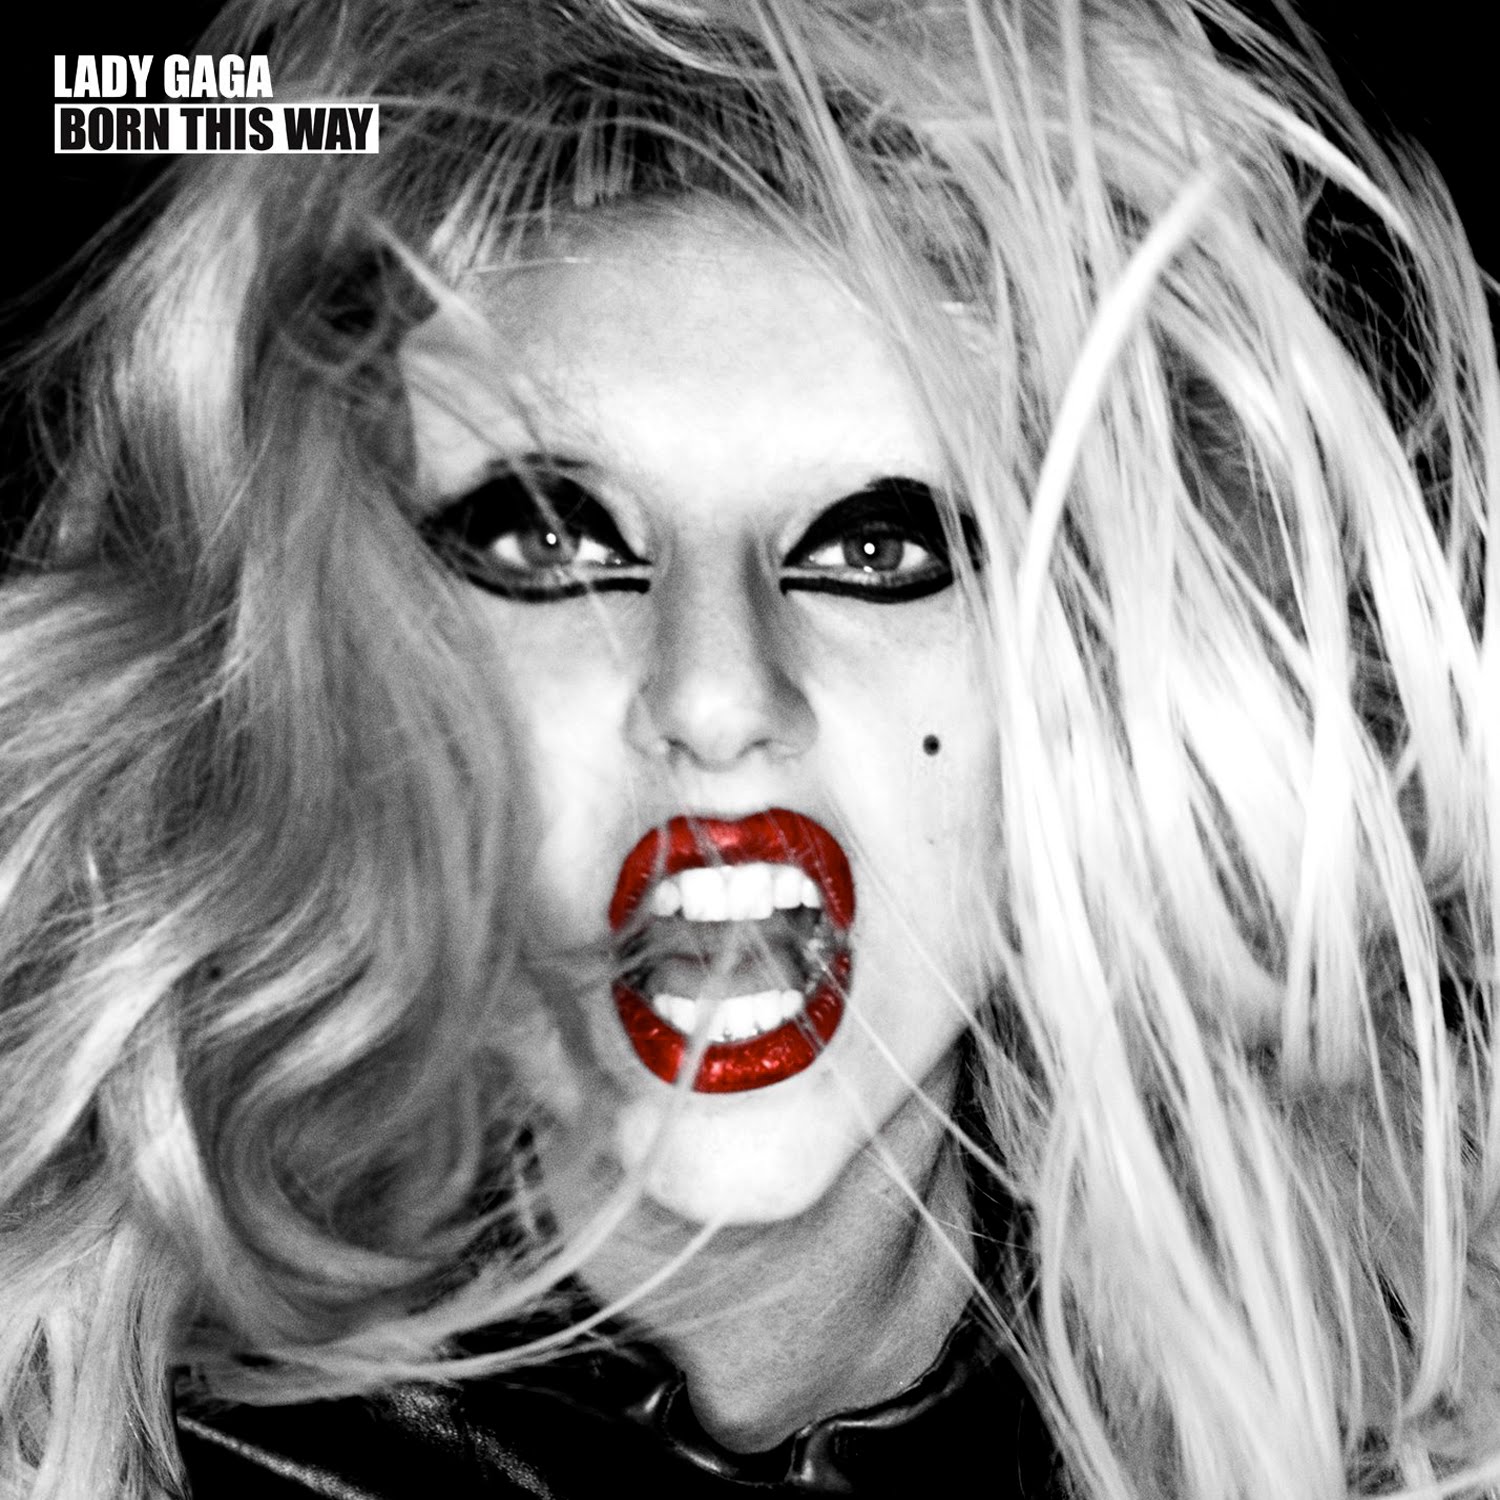 http://3.bp.blogspot.com/-vPOQH2vipXE/TdZ_2crG4WI/AAAAAAAAAW8/xAnYPXt3d3g/s1600/Lady-GaGa-Born-This-Way-Official-Album-Cover-Deluxe-Edition.jpg